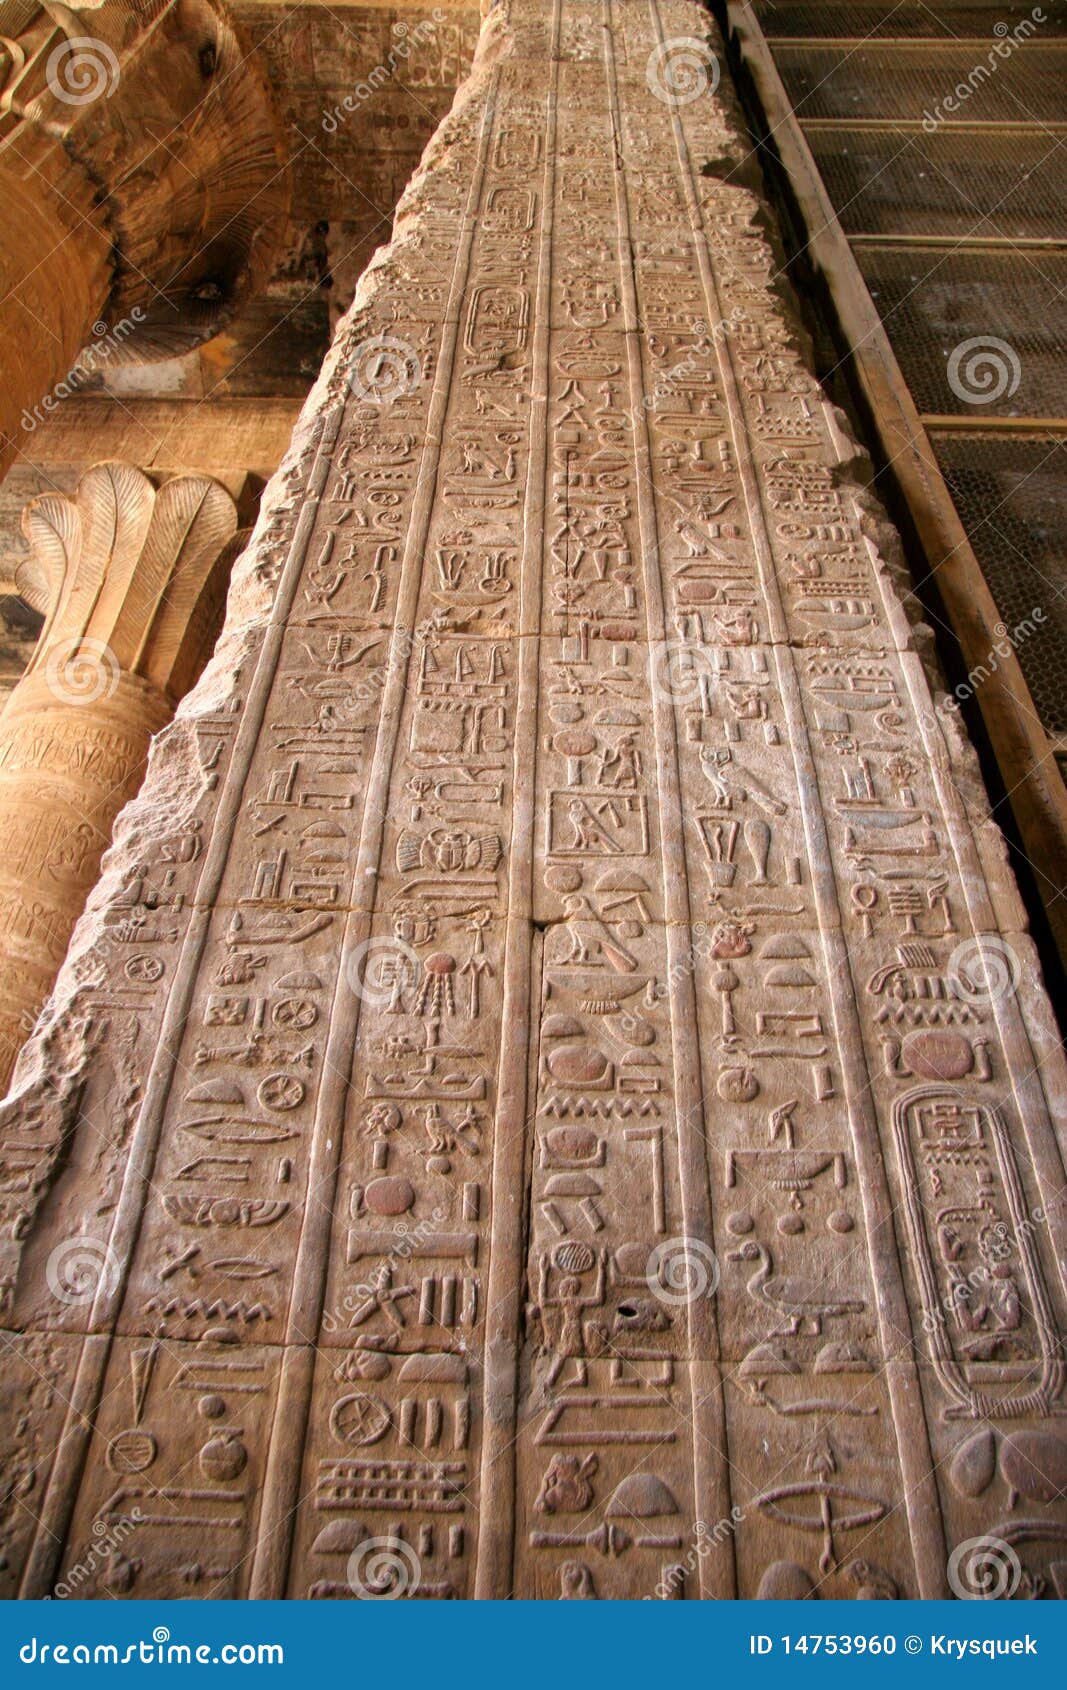 egypt edfu hieroglyphics on vertical wall